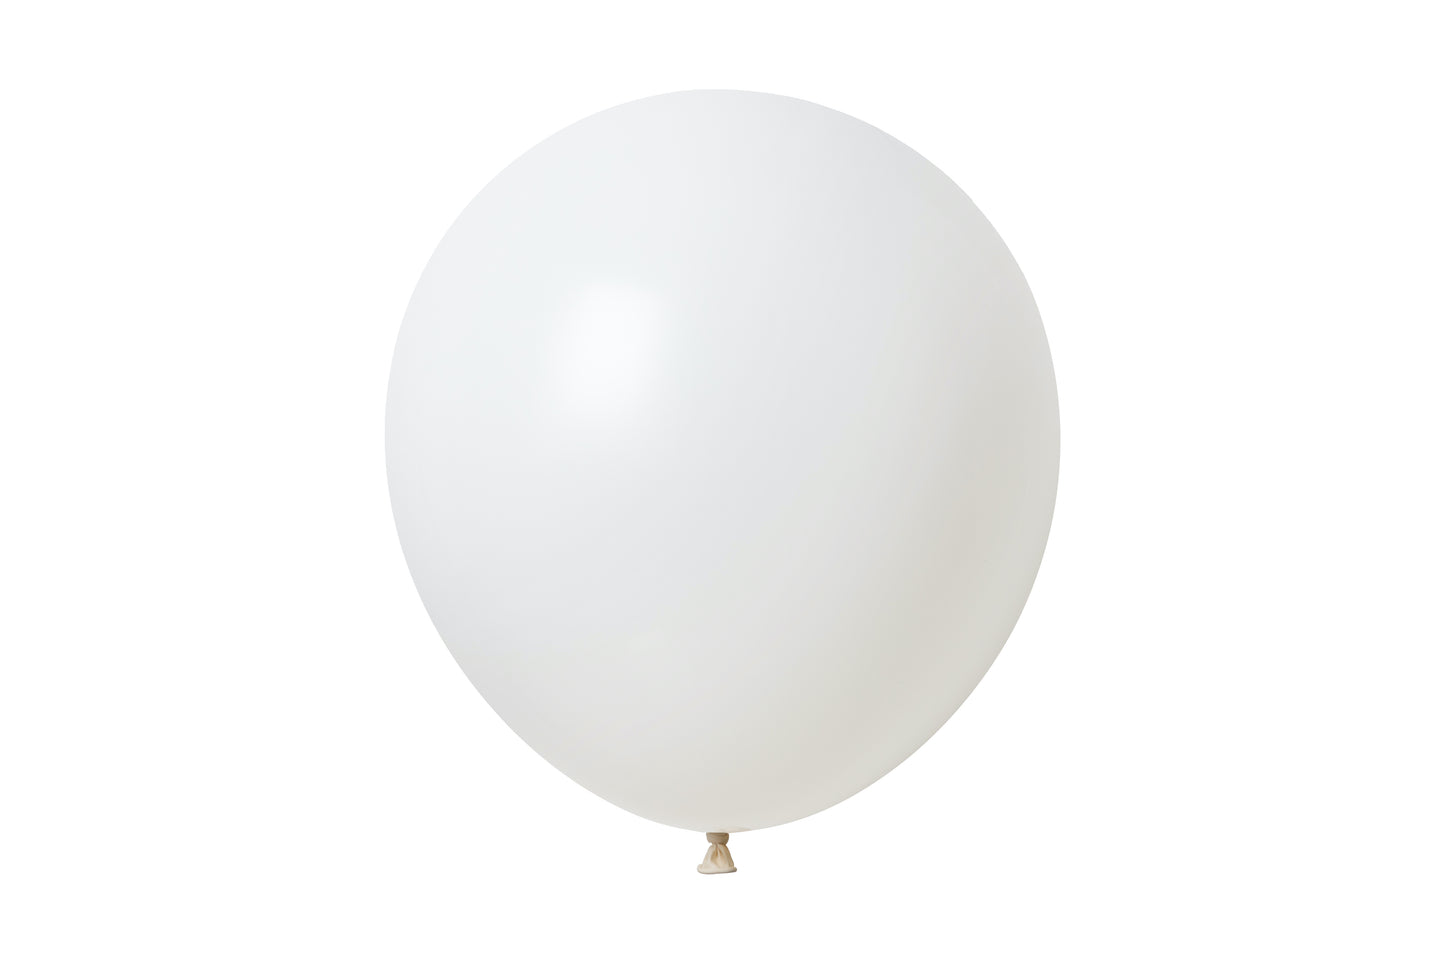 Winntex Premium 12" White Latex Balloon 100pc